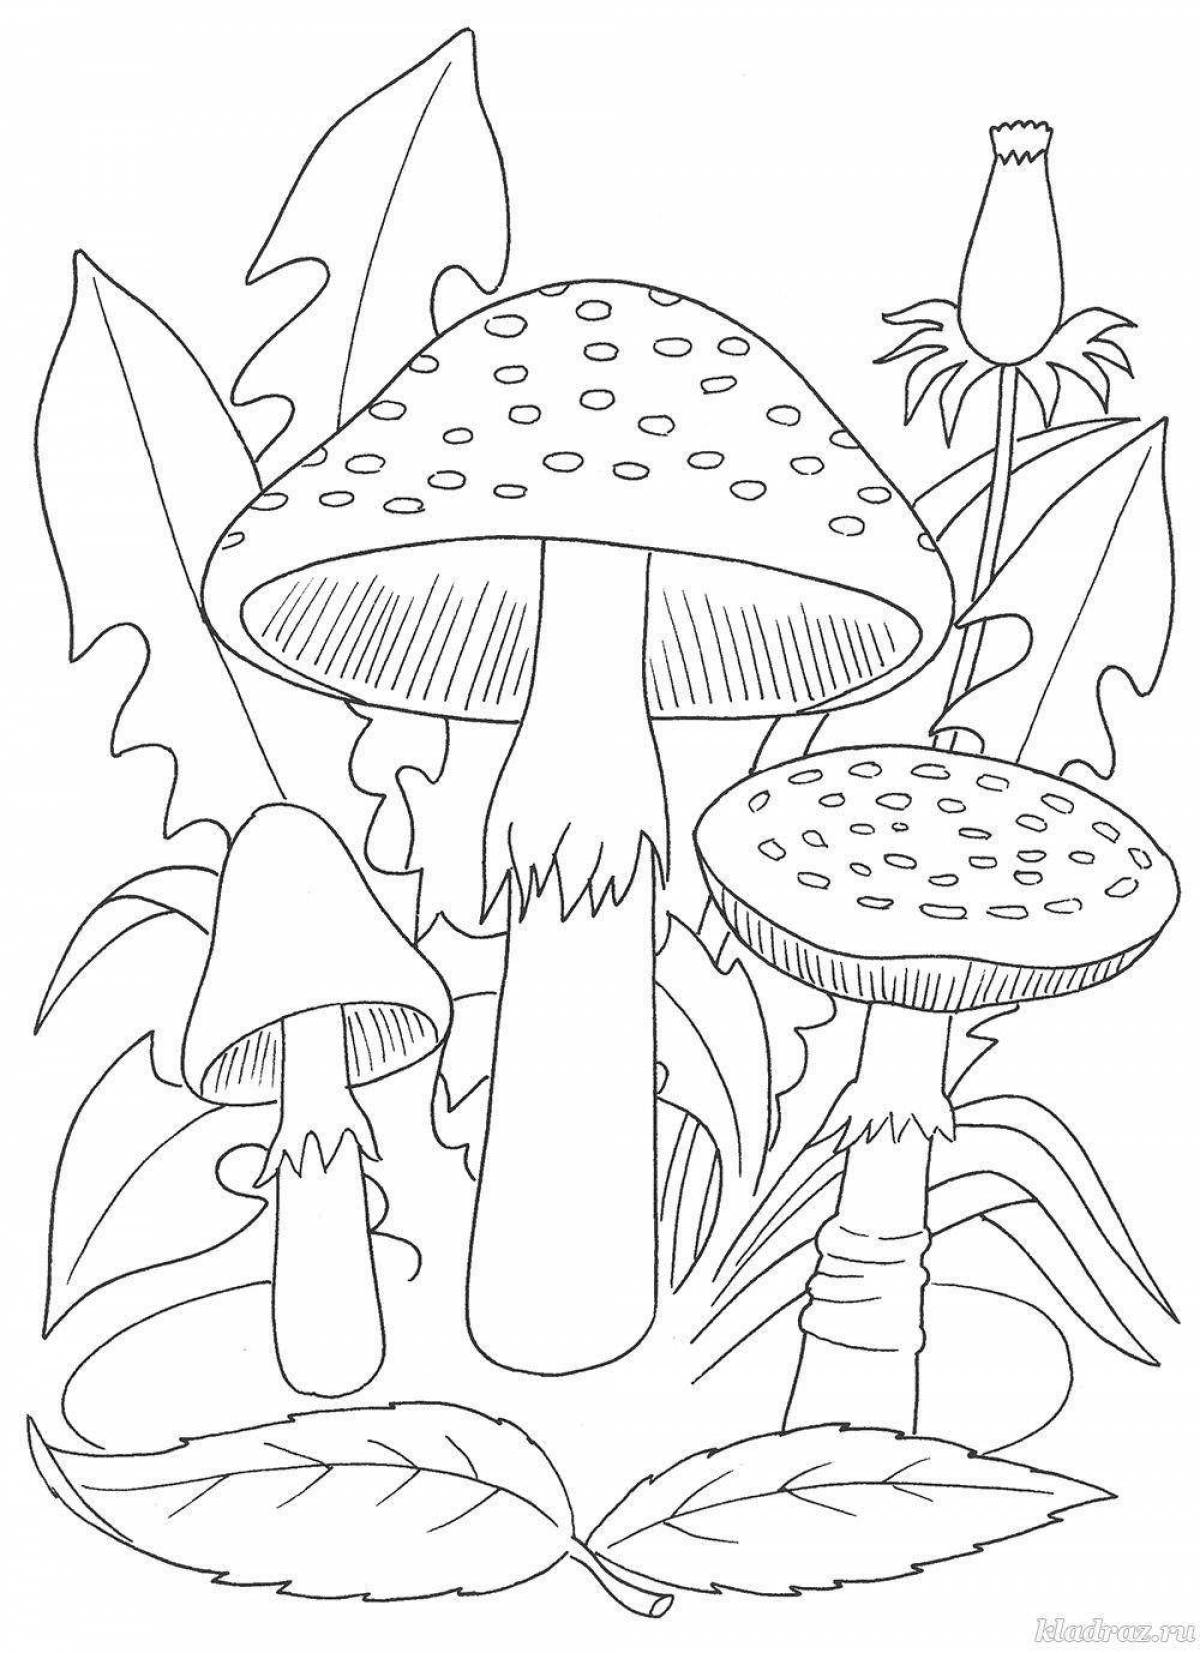 Fun toadstool mushrooms